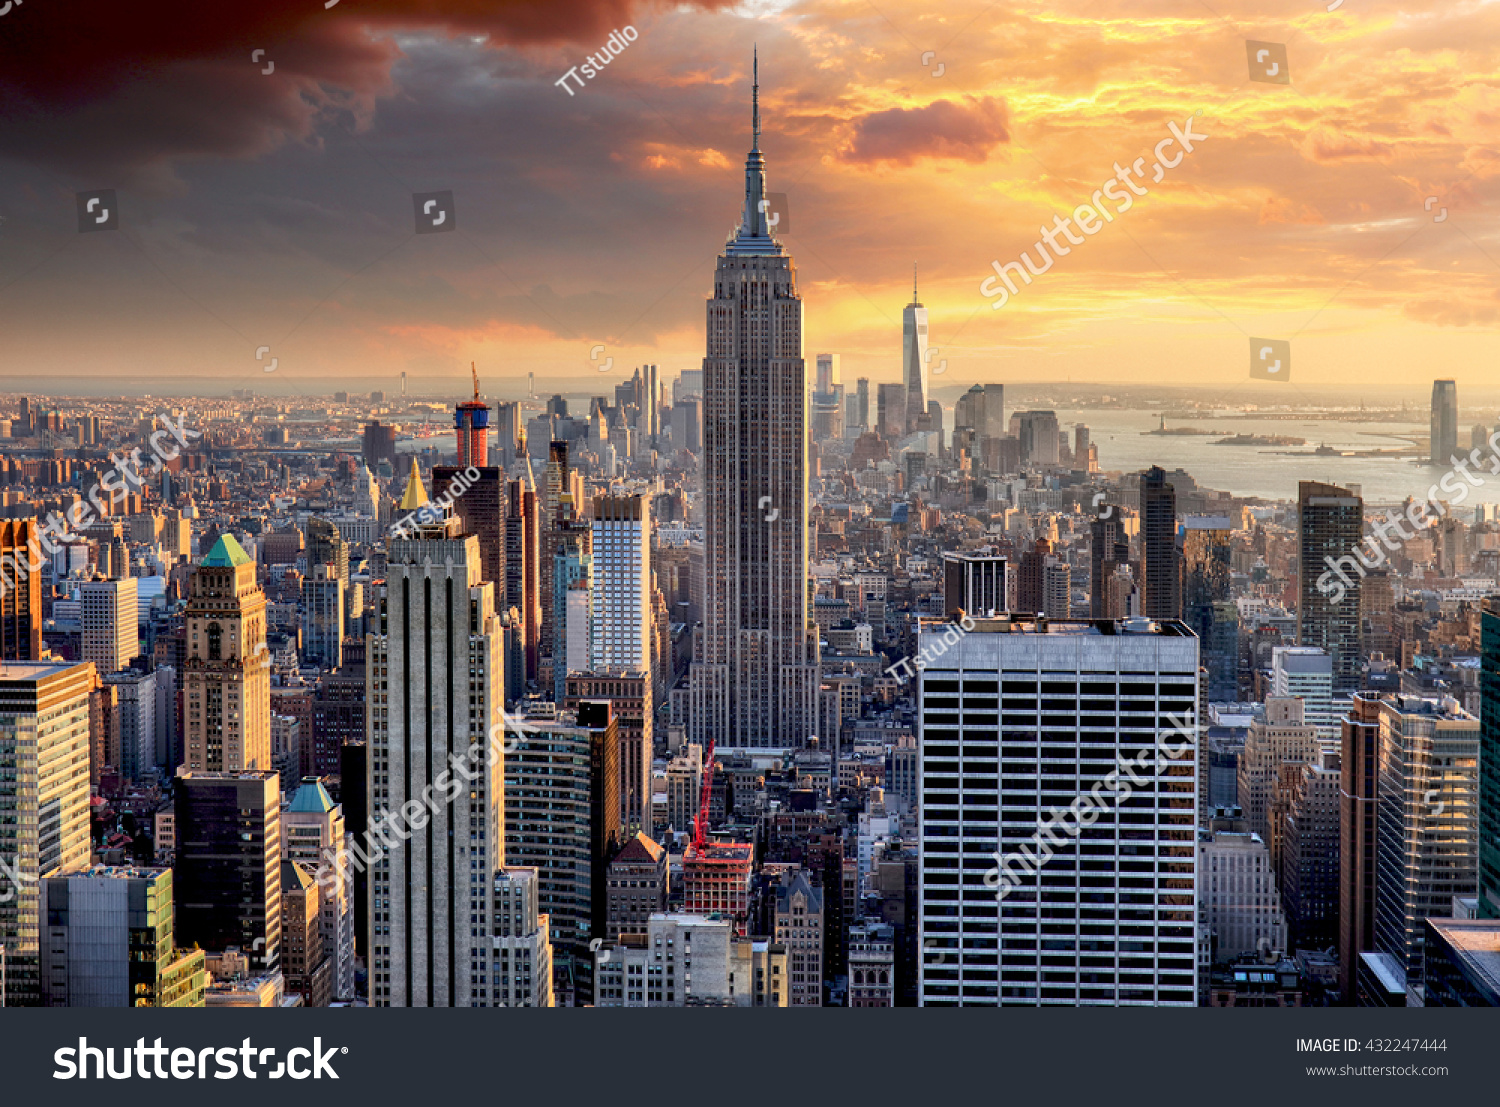 New York skyline at sunset, USA. #432247444